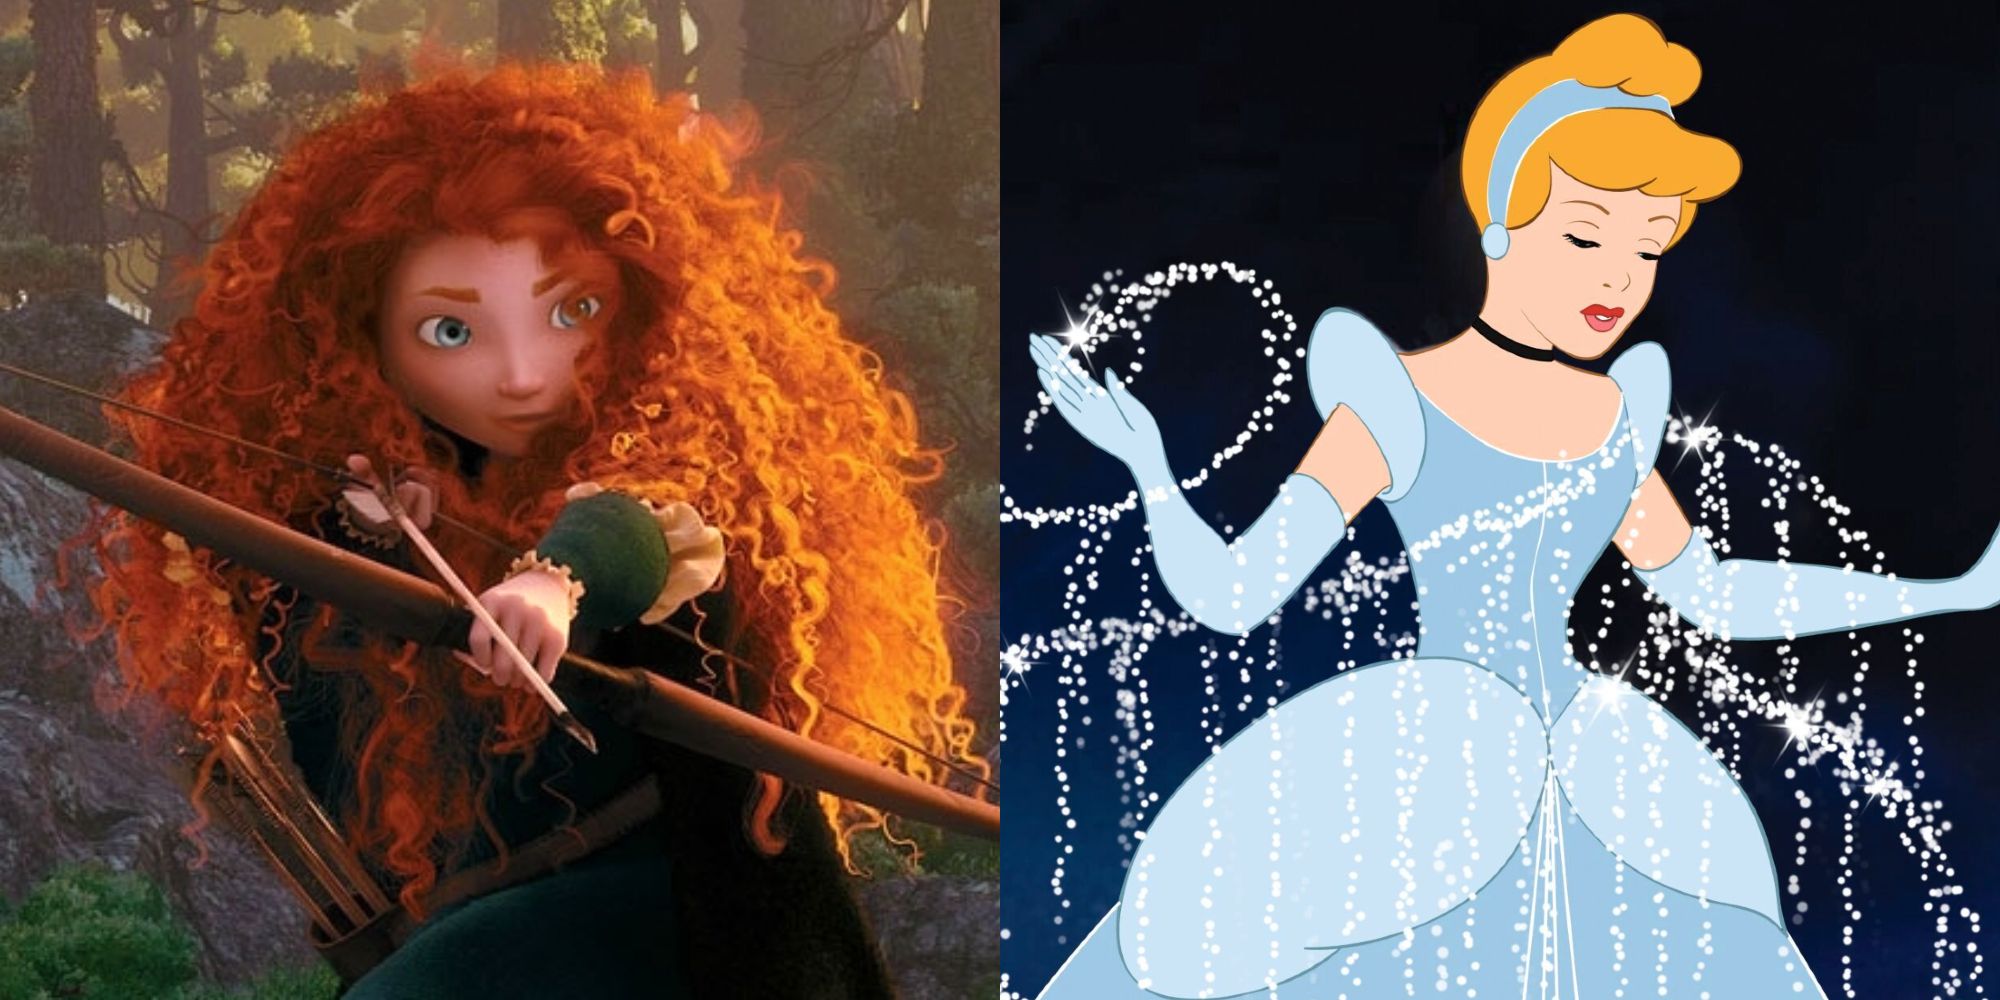 Split image: Merida nocking an arrow, Cinderella being enchanted into a gown